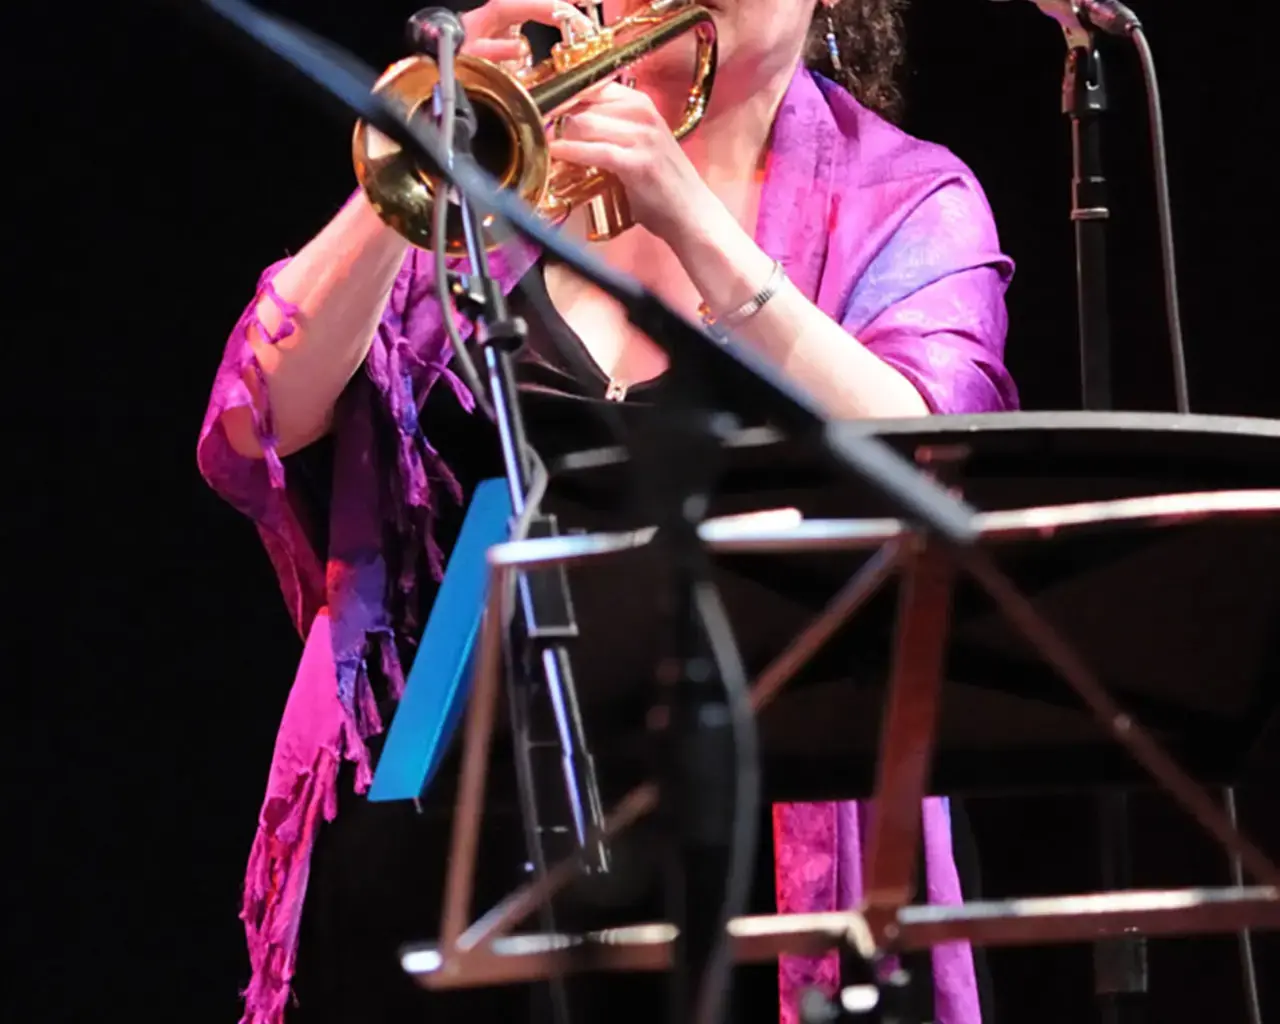 Susan Lankin-Watts in performance. Photo by Alan Lankin.